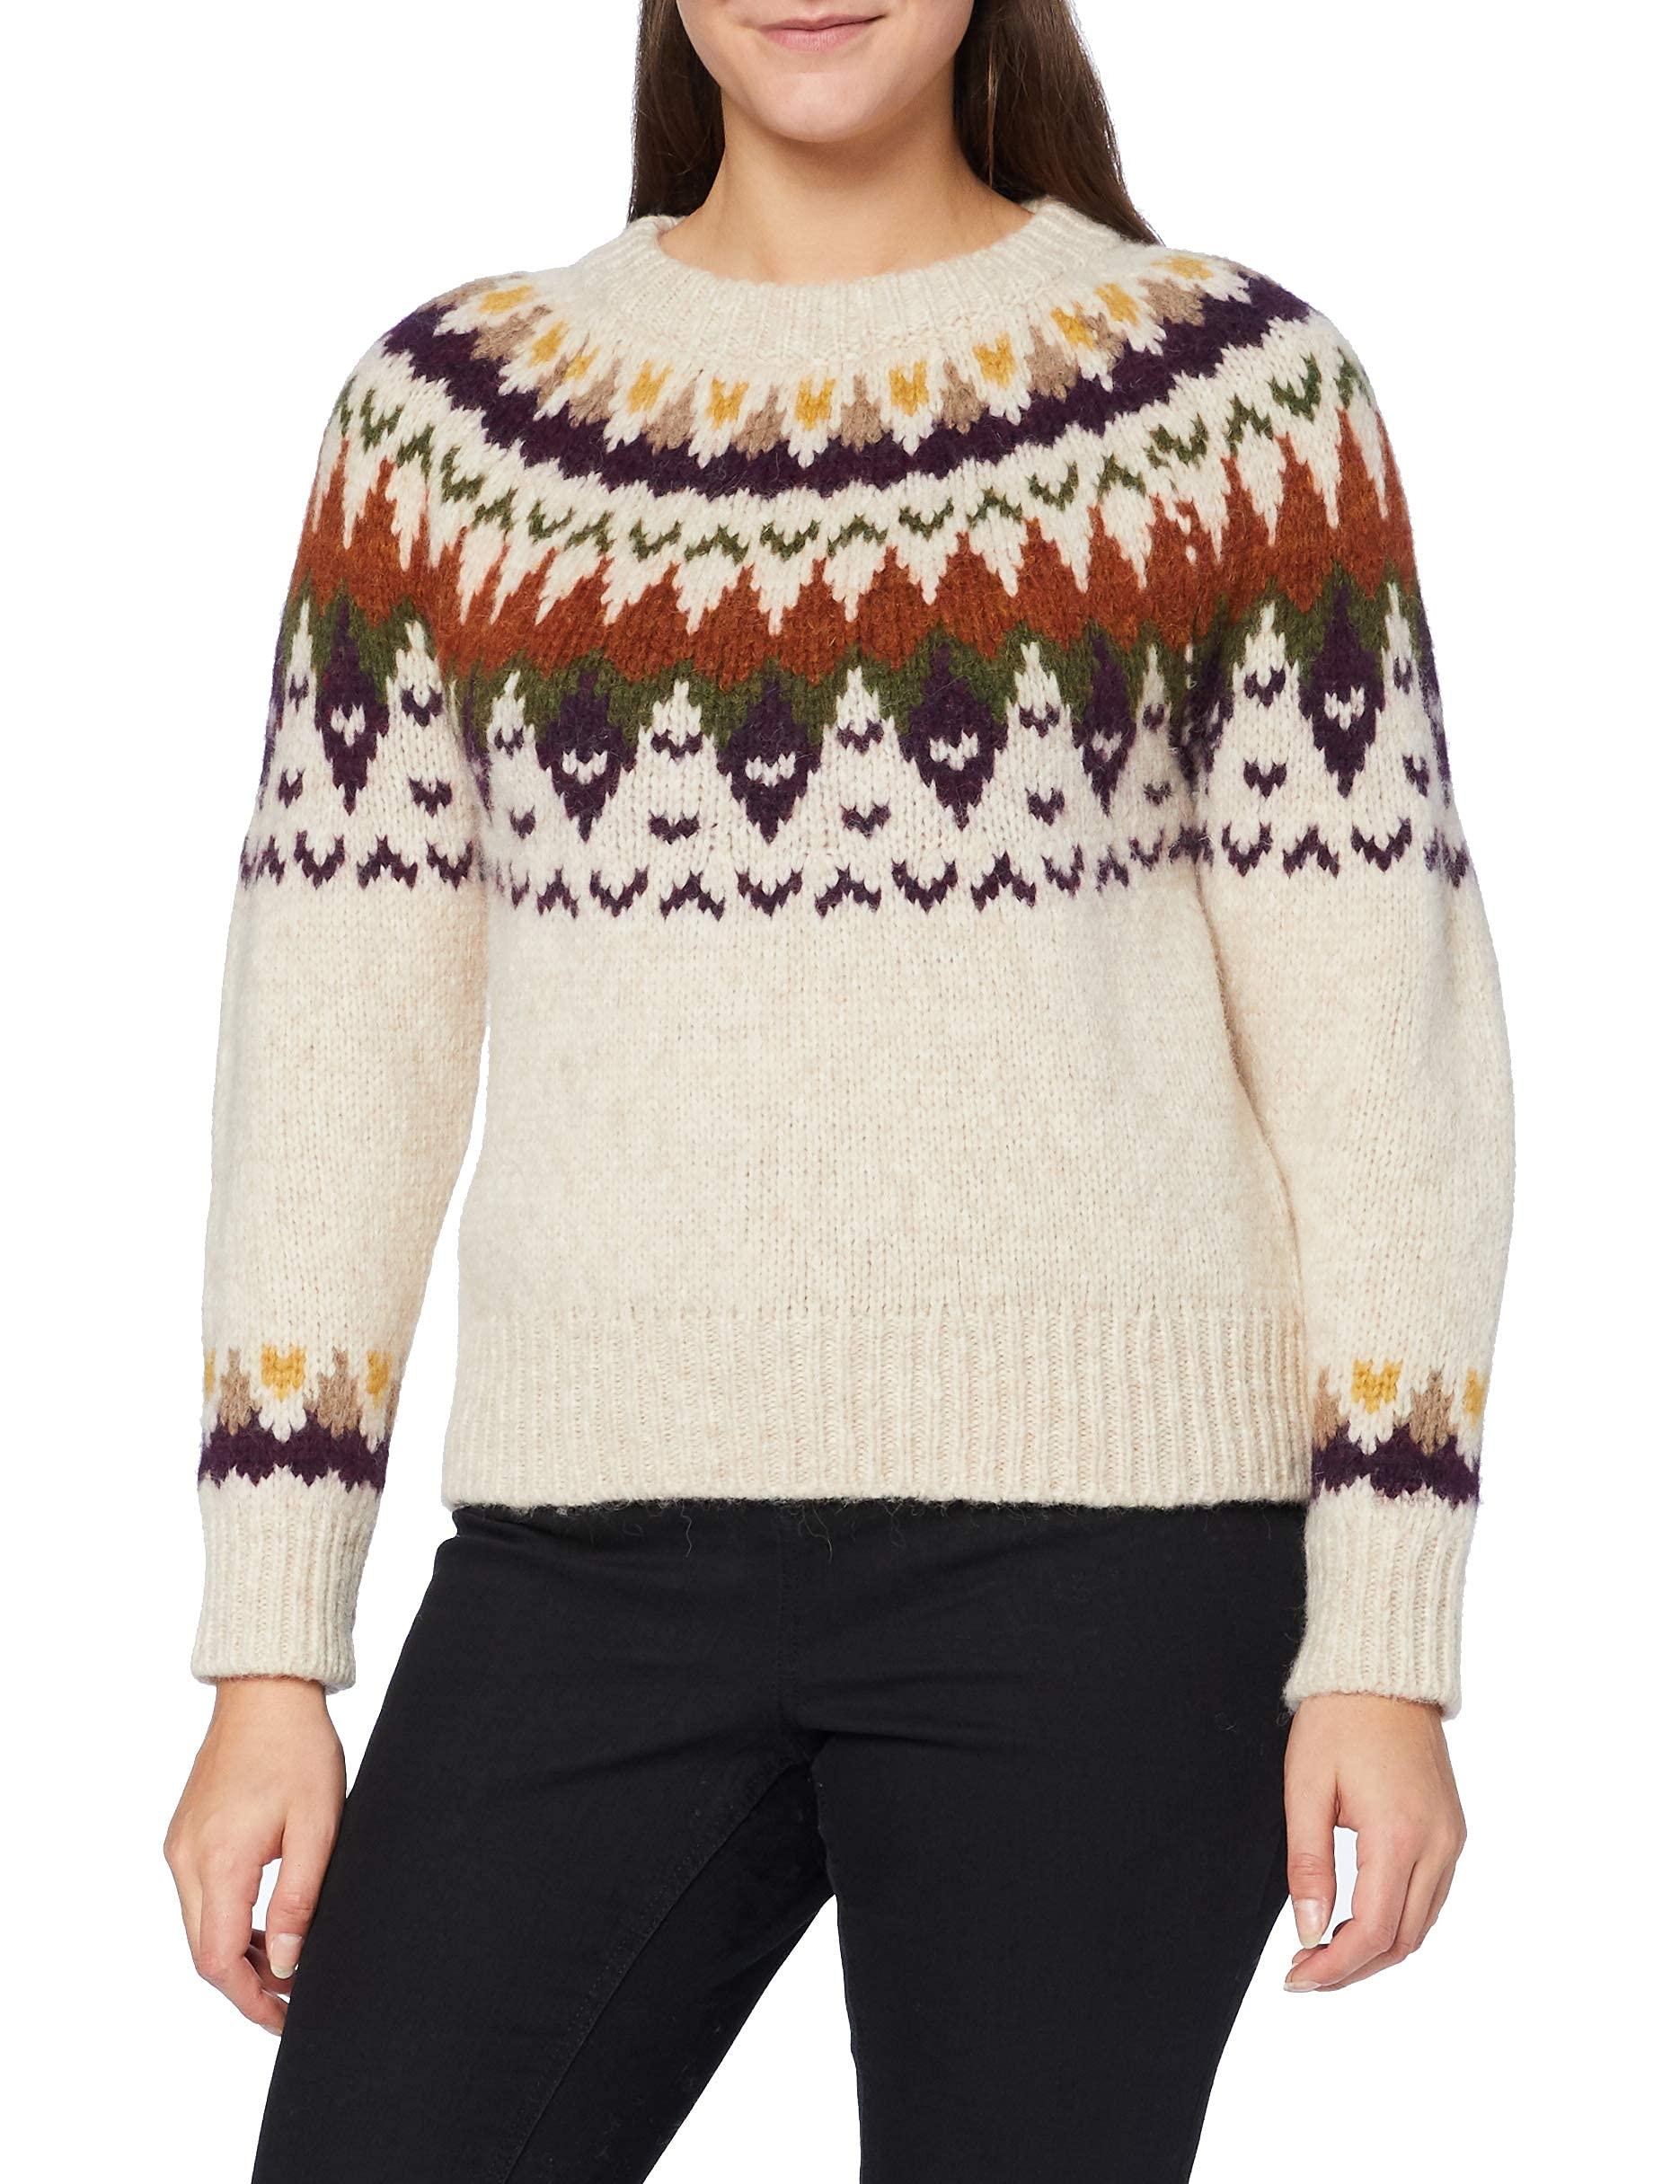 GANT Wool Winter Fair Isle Crew Neck Sweater - Save 37% | Lyst UK